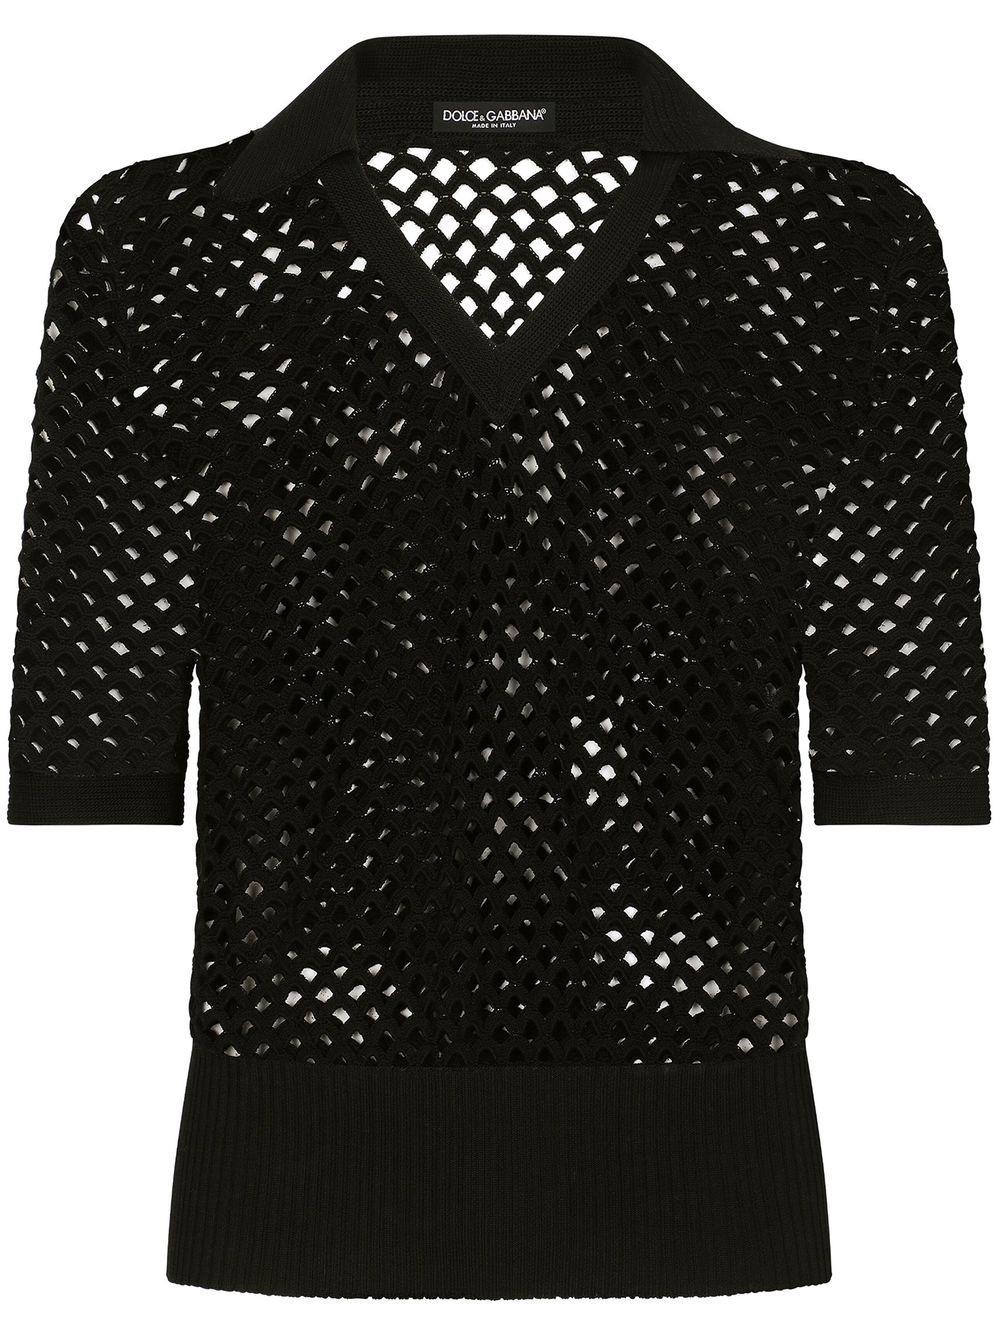 Dolce & Gabbana Open-knit Cotton Top In Black